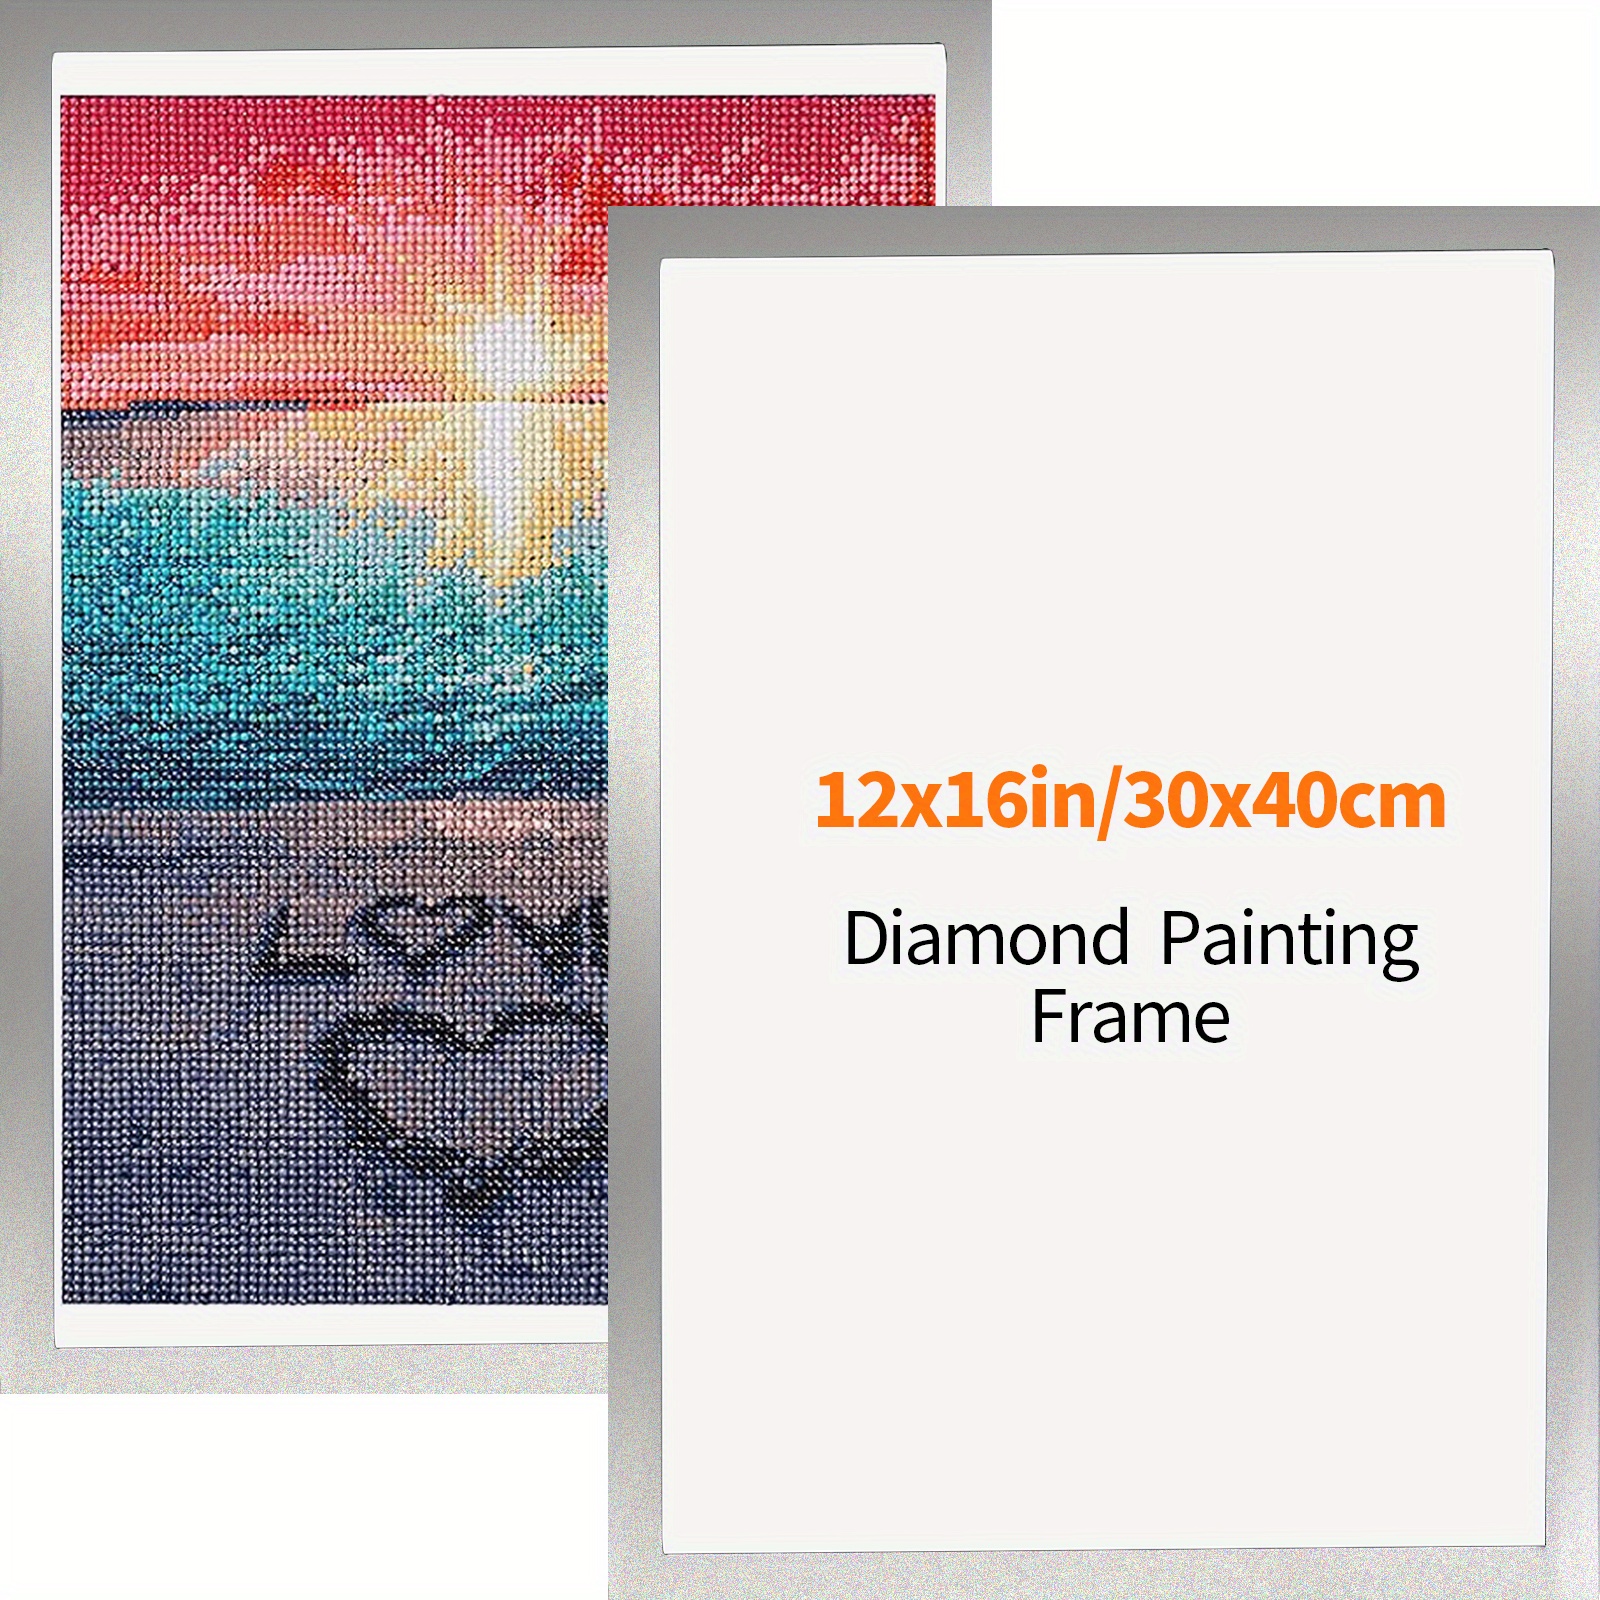 12x16 Wood Picture Frames for Diamond Painting 30x40cm Diamond Art